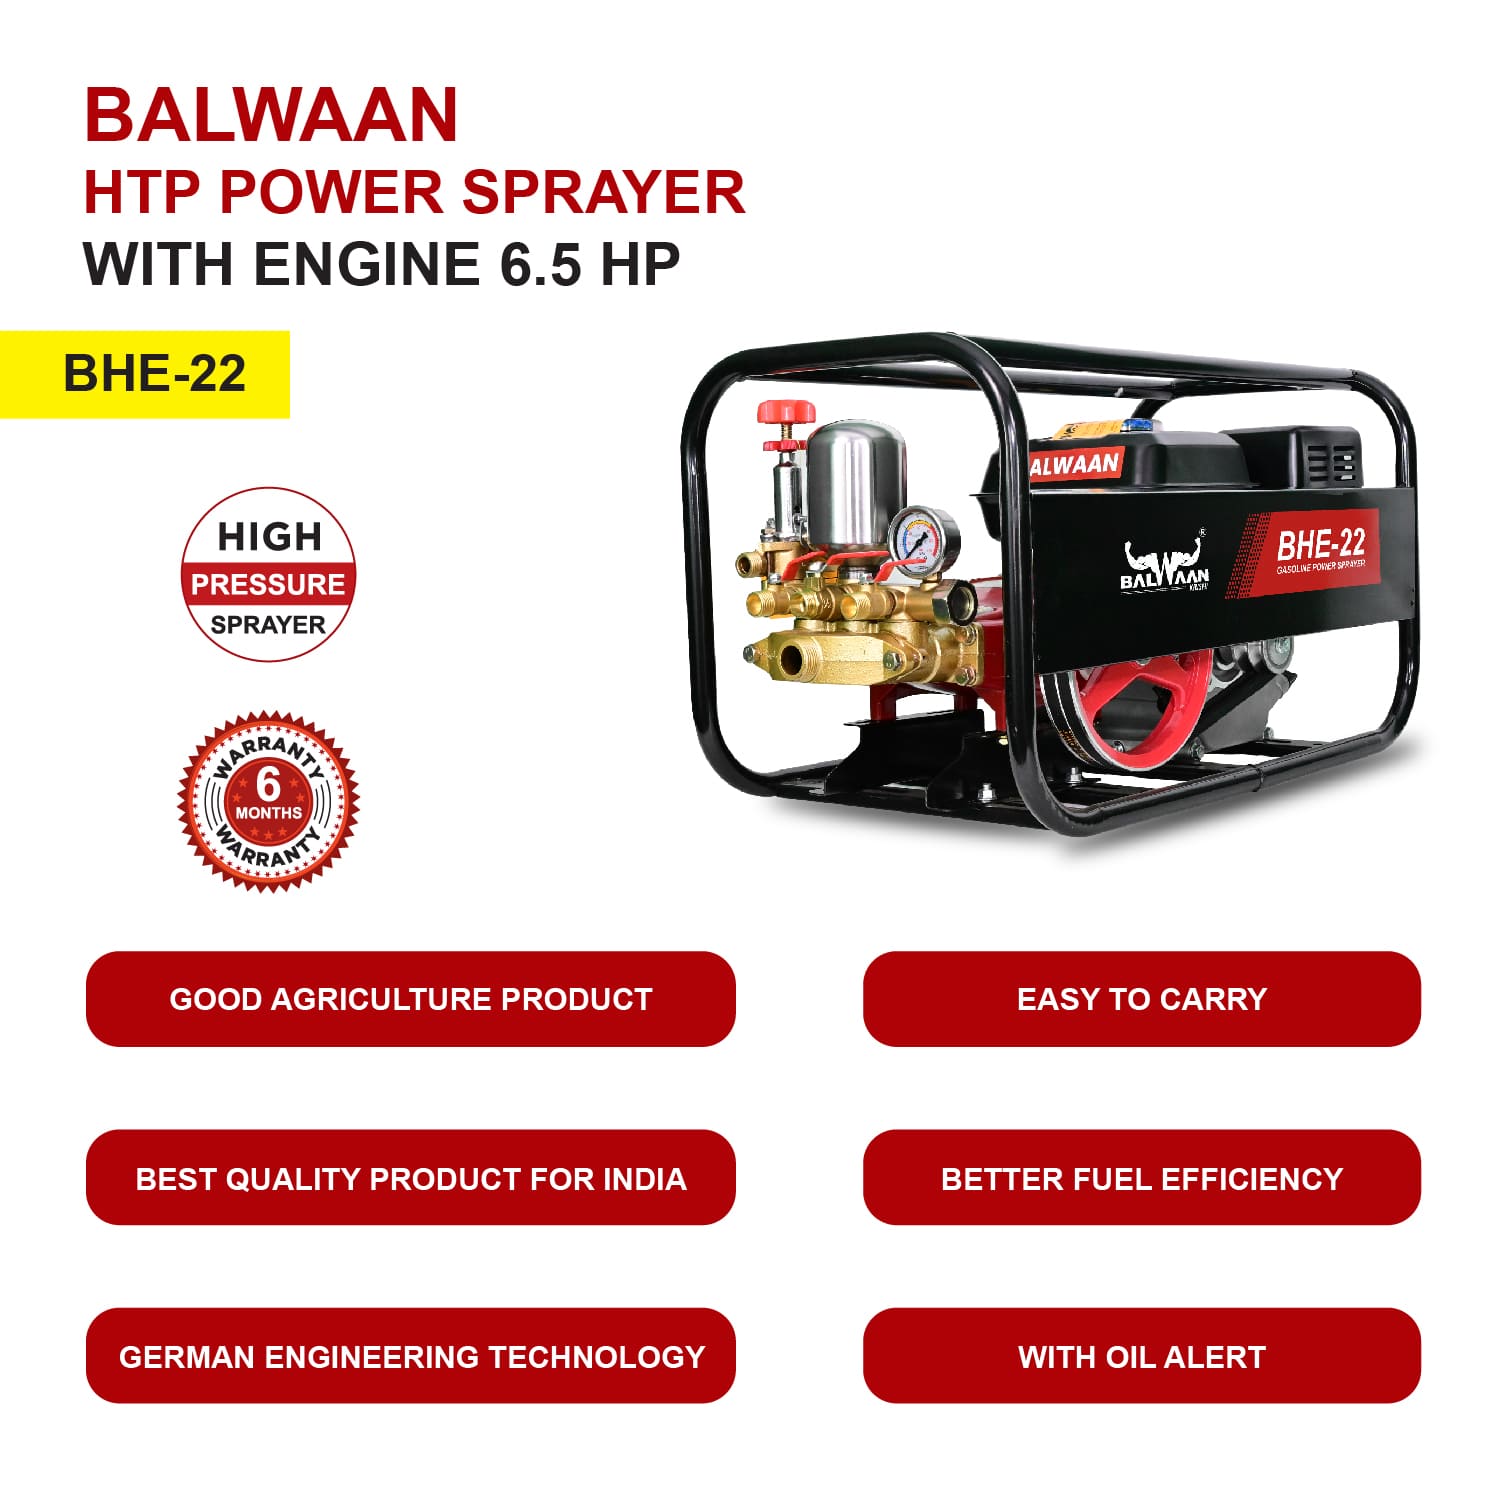 Balwaan 22 No. HTP Sprayer with 6.5HP Engine & 50 Mtr. Hose|BHE-22